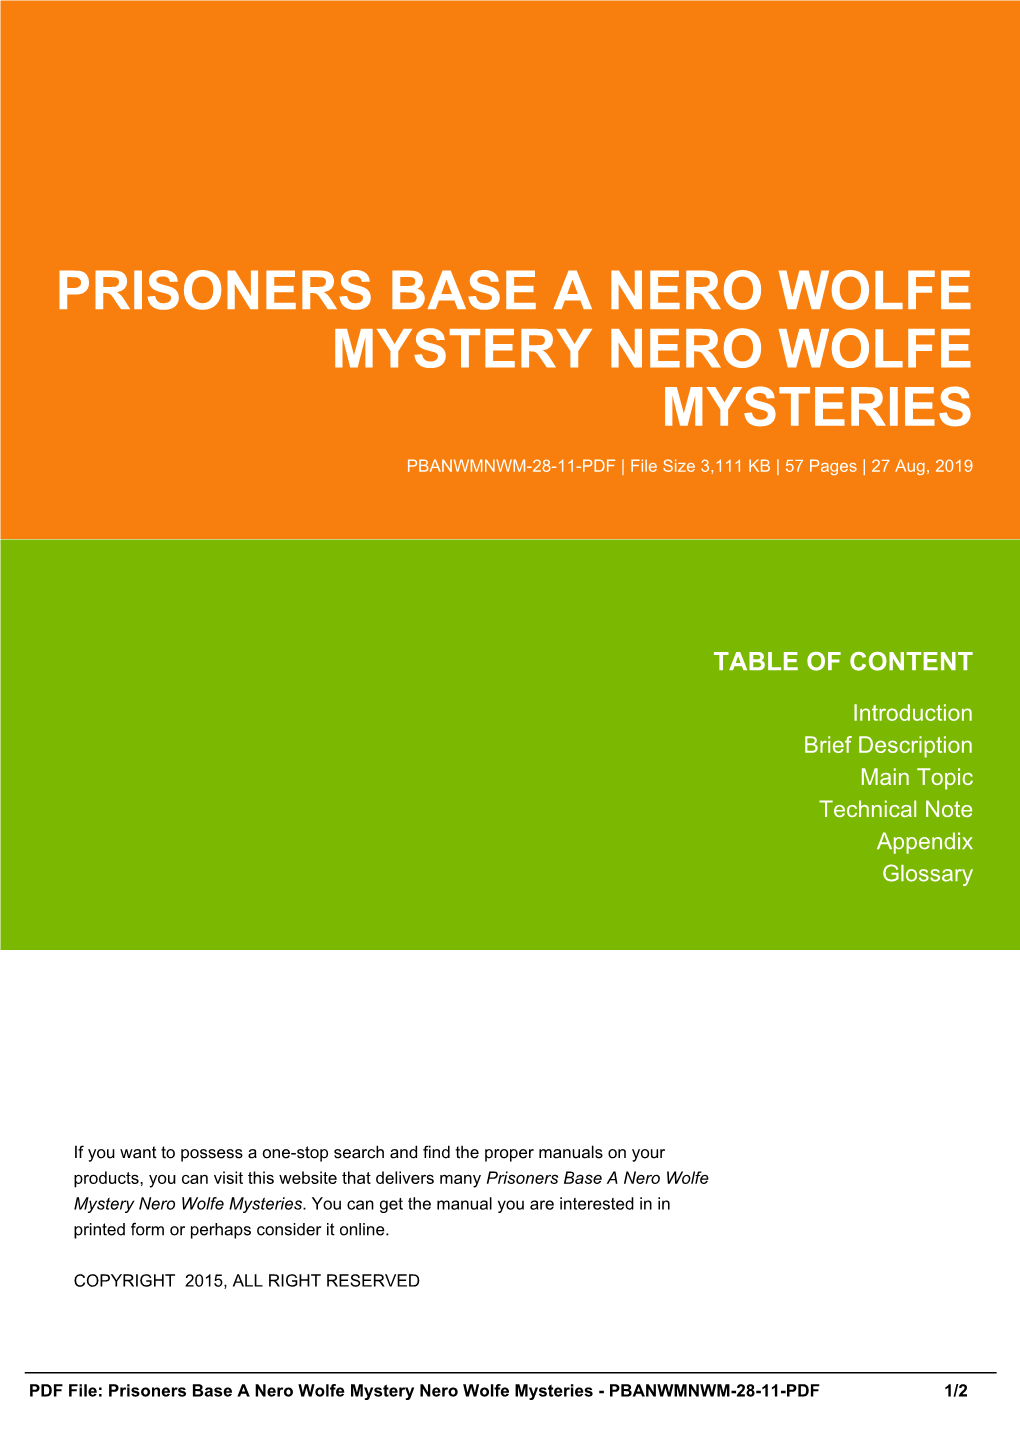 Prisoners Base a Nero Wolfe Mystery Nero Wolfe Mysteries